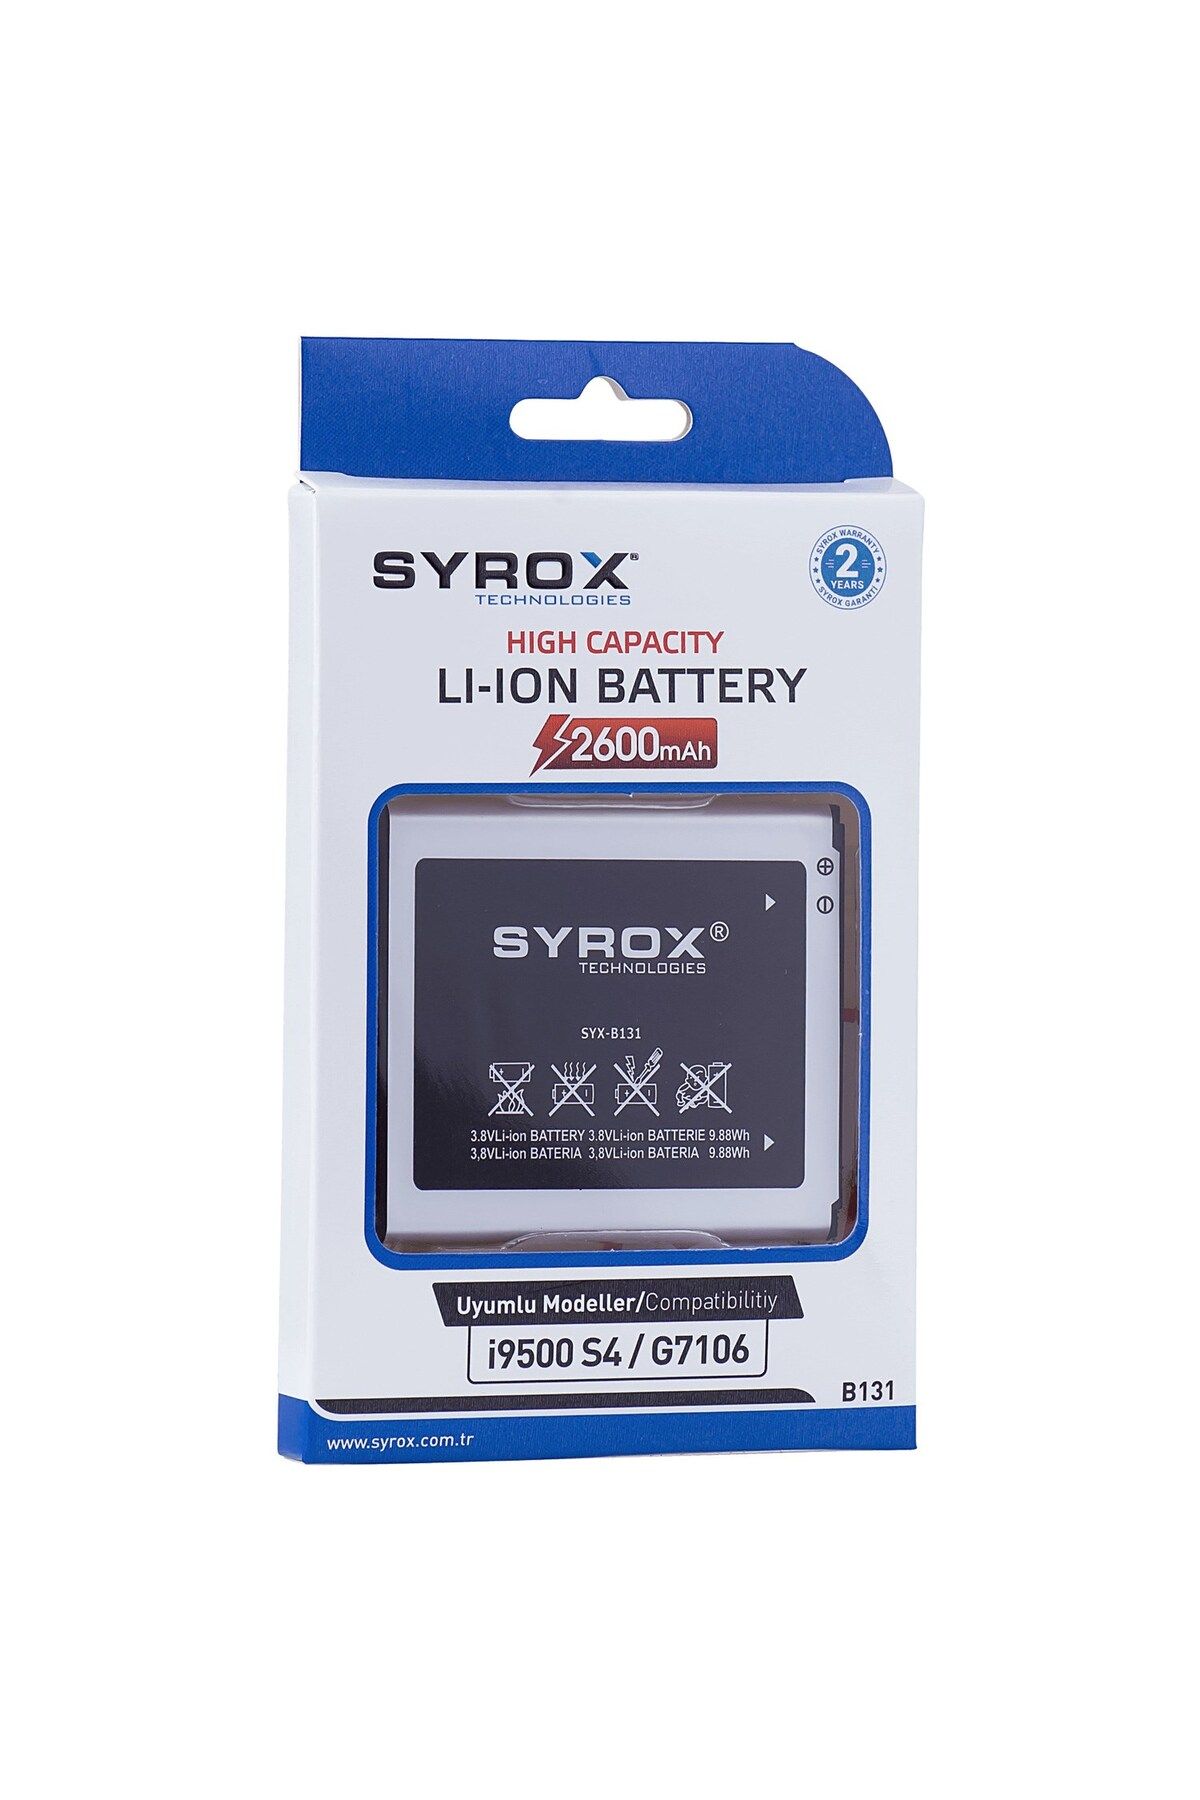 Syrox Samsung S4 / i9500 / G7106 Batarya B131